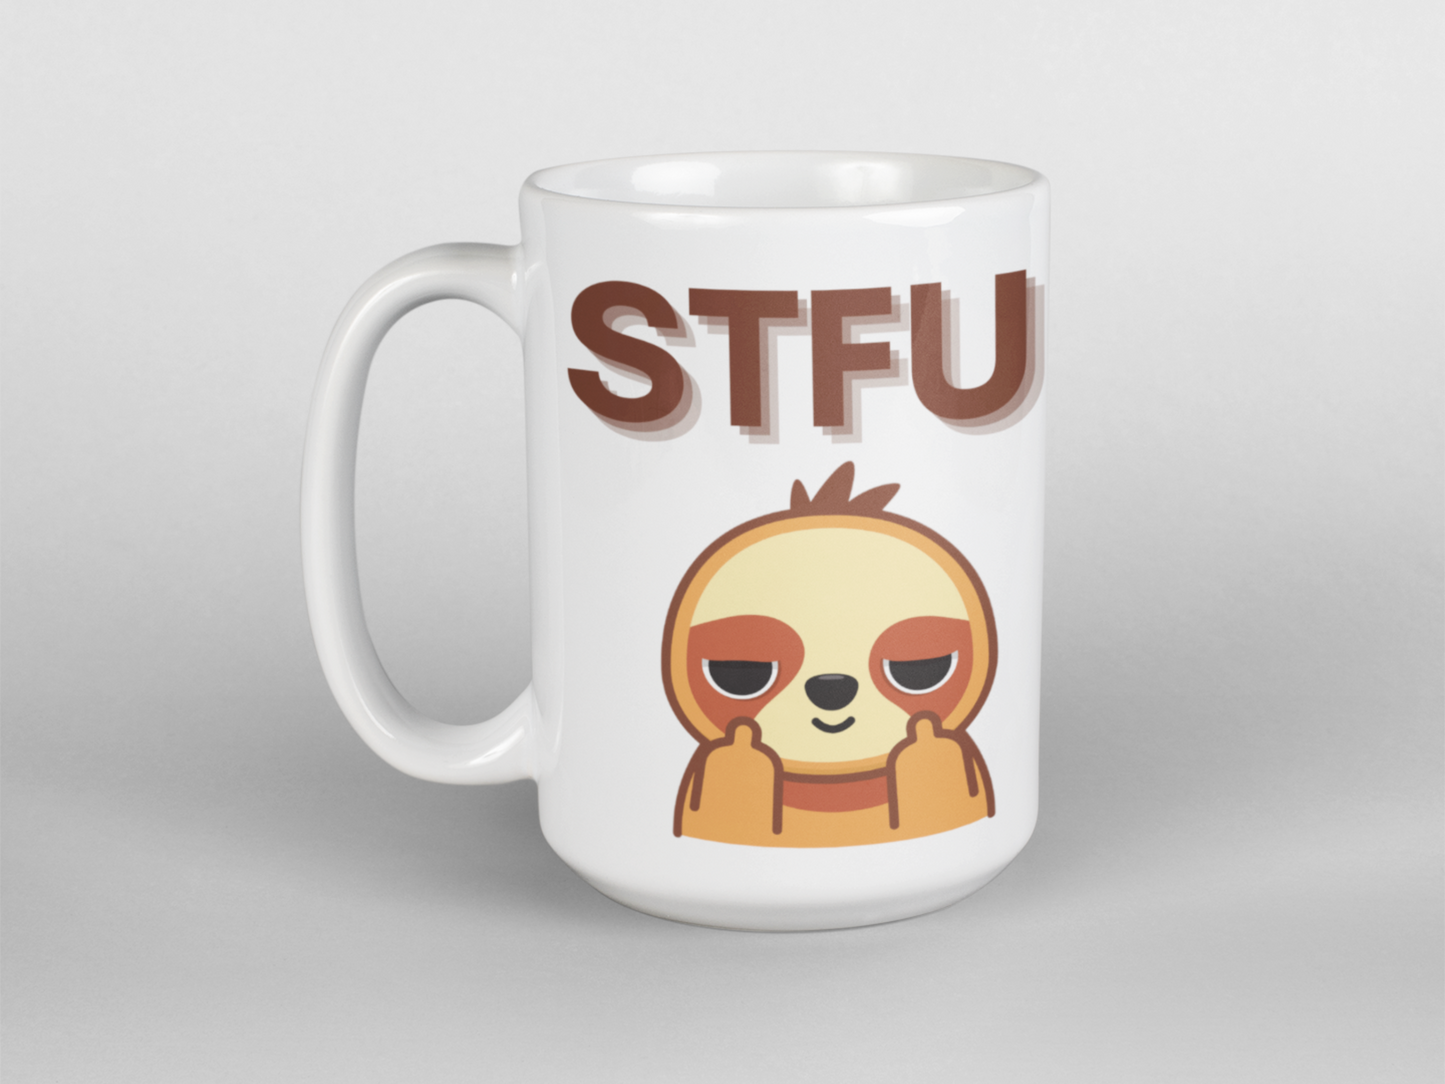 STFU sloth coffee mug